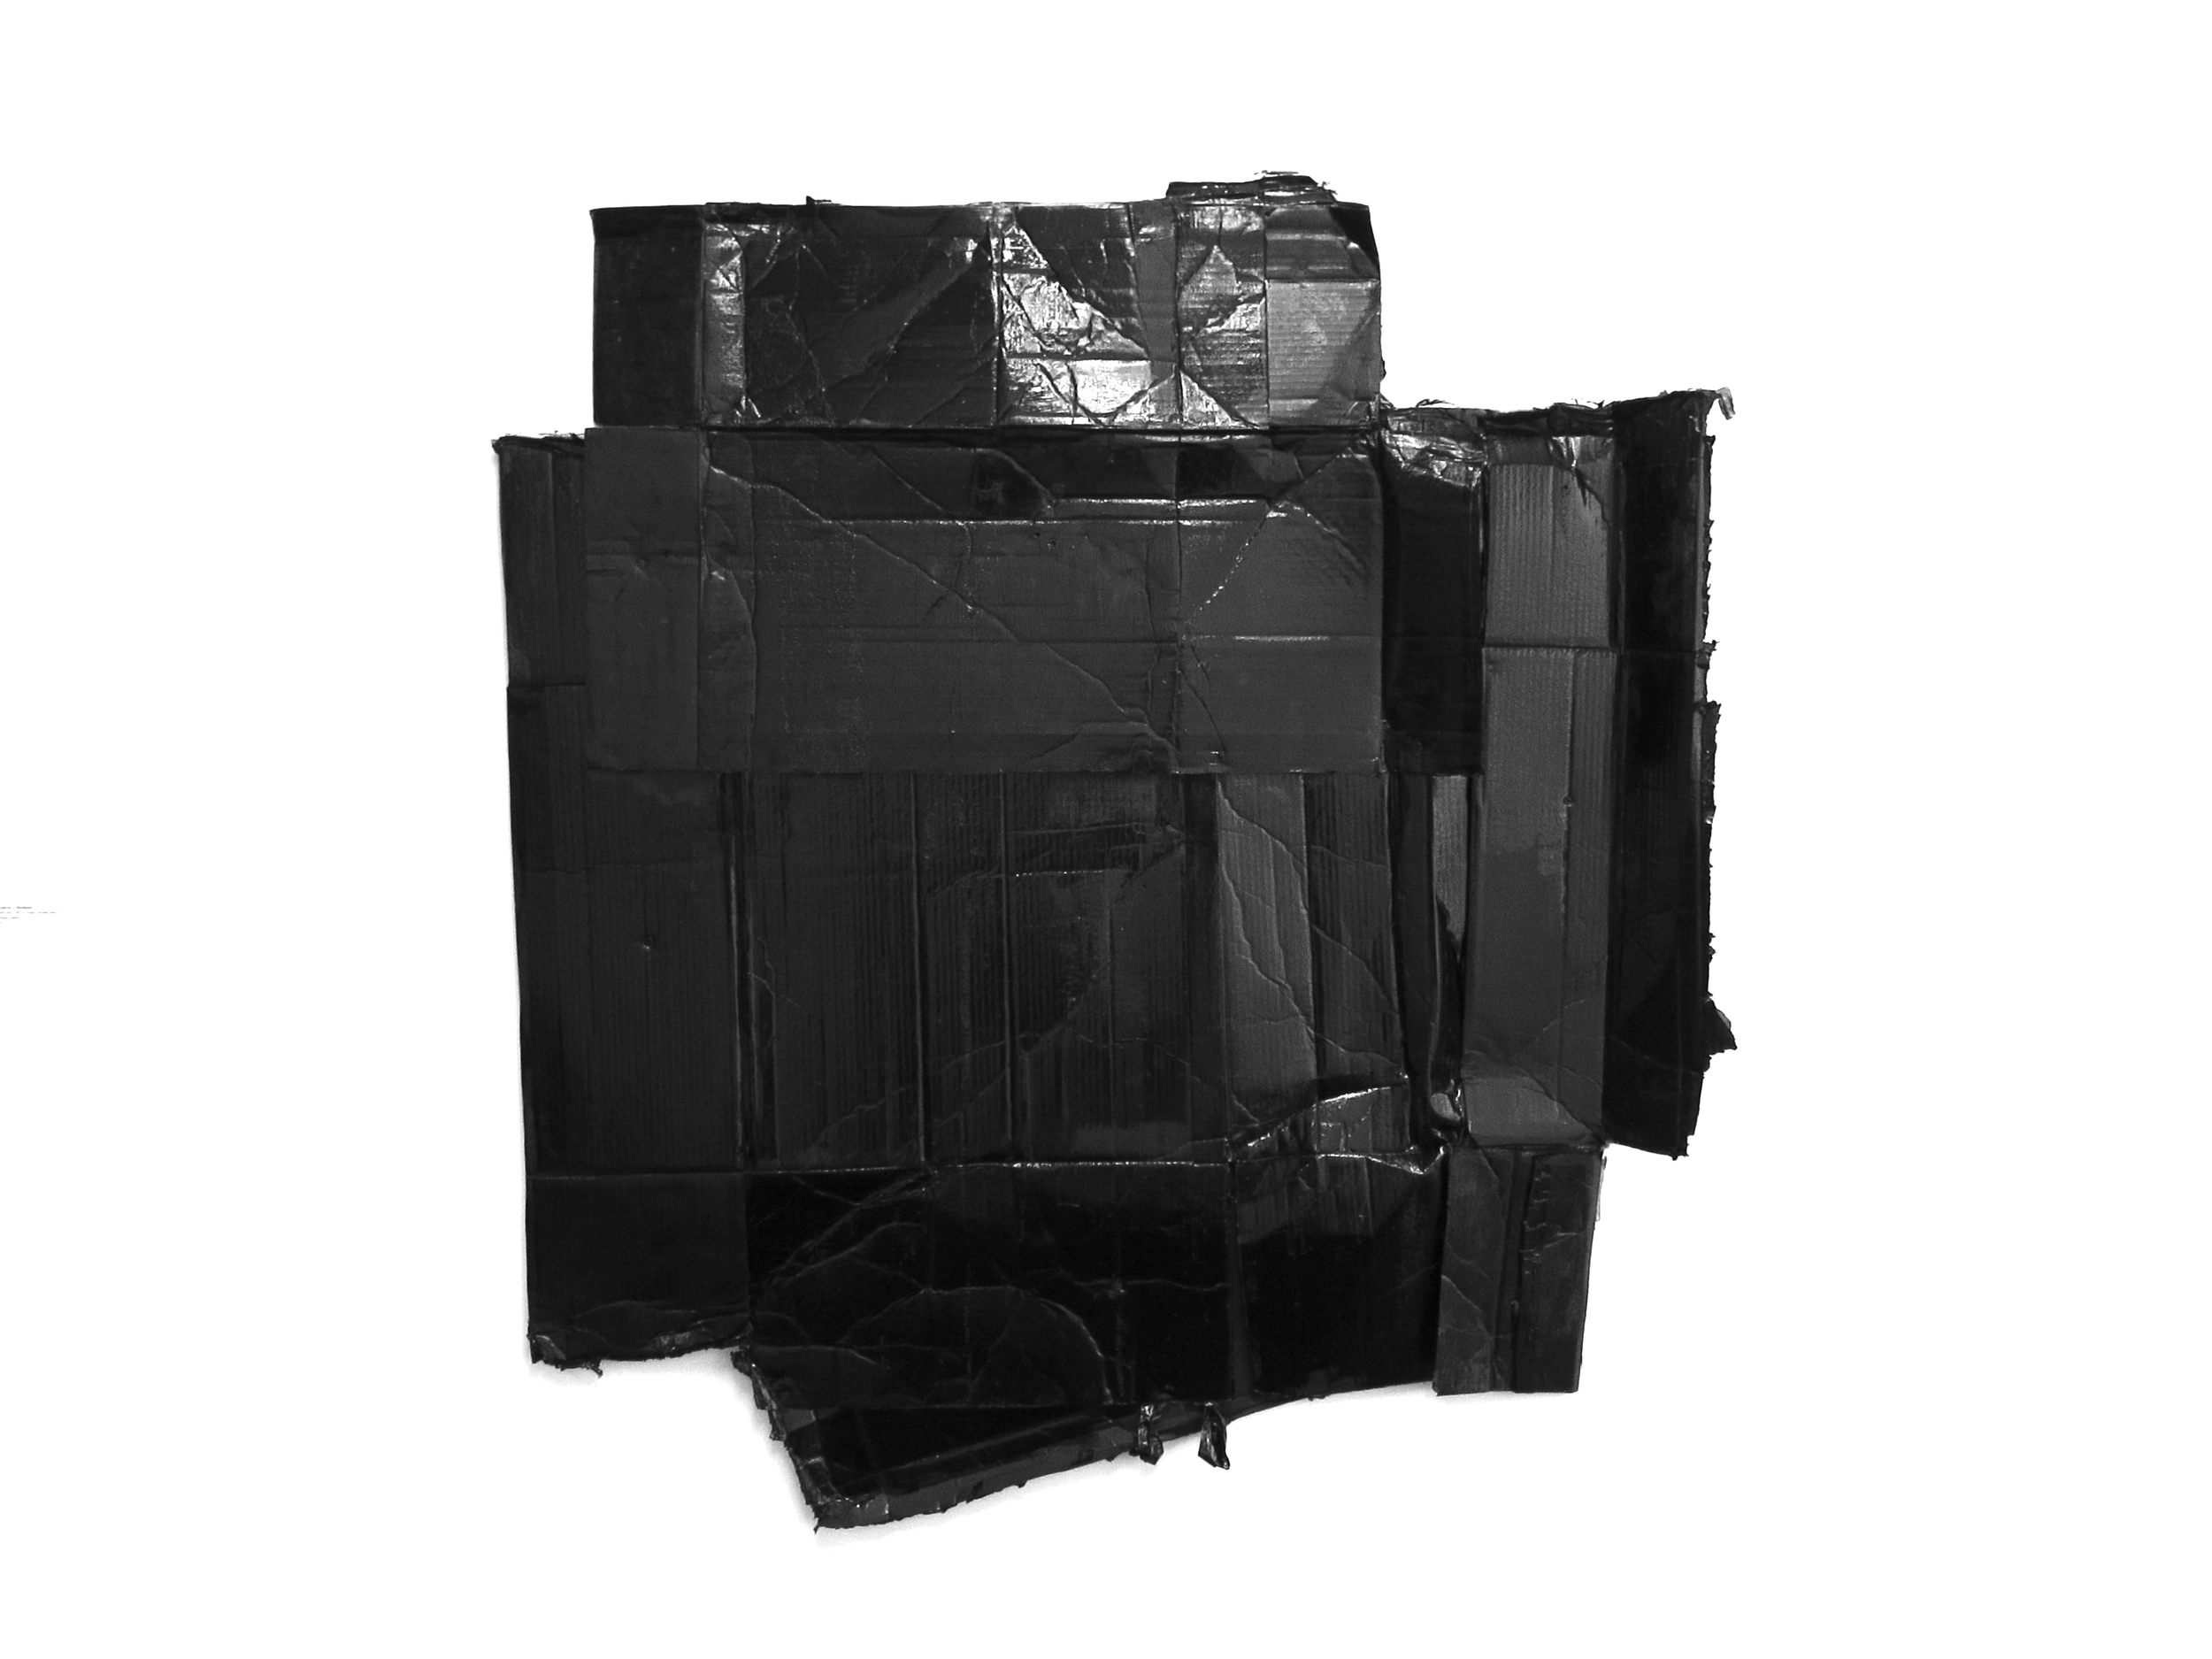  Gabriel Shuldiner MAGNA CARTA (black square redux) Mixed media approx. 60" x 53" 